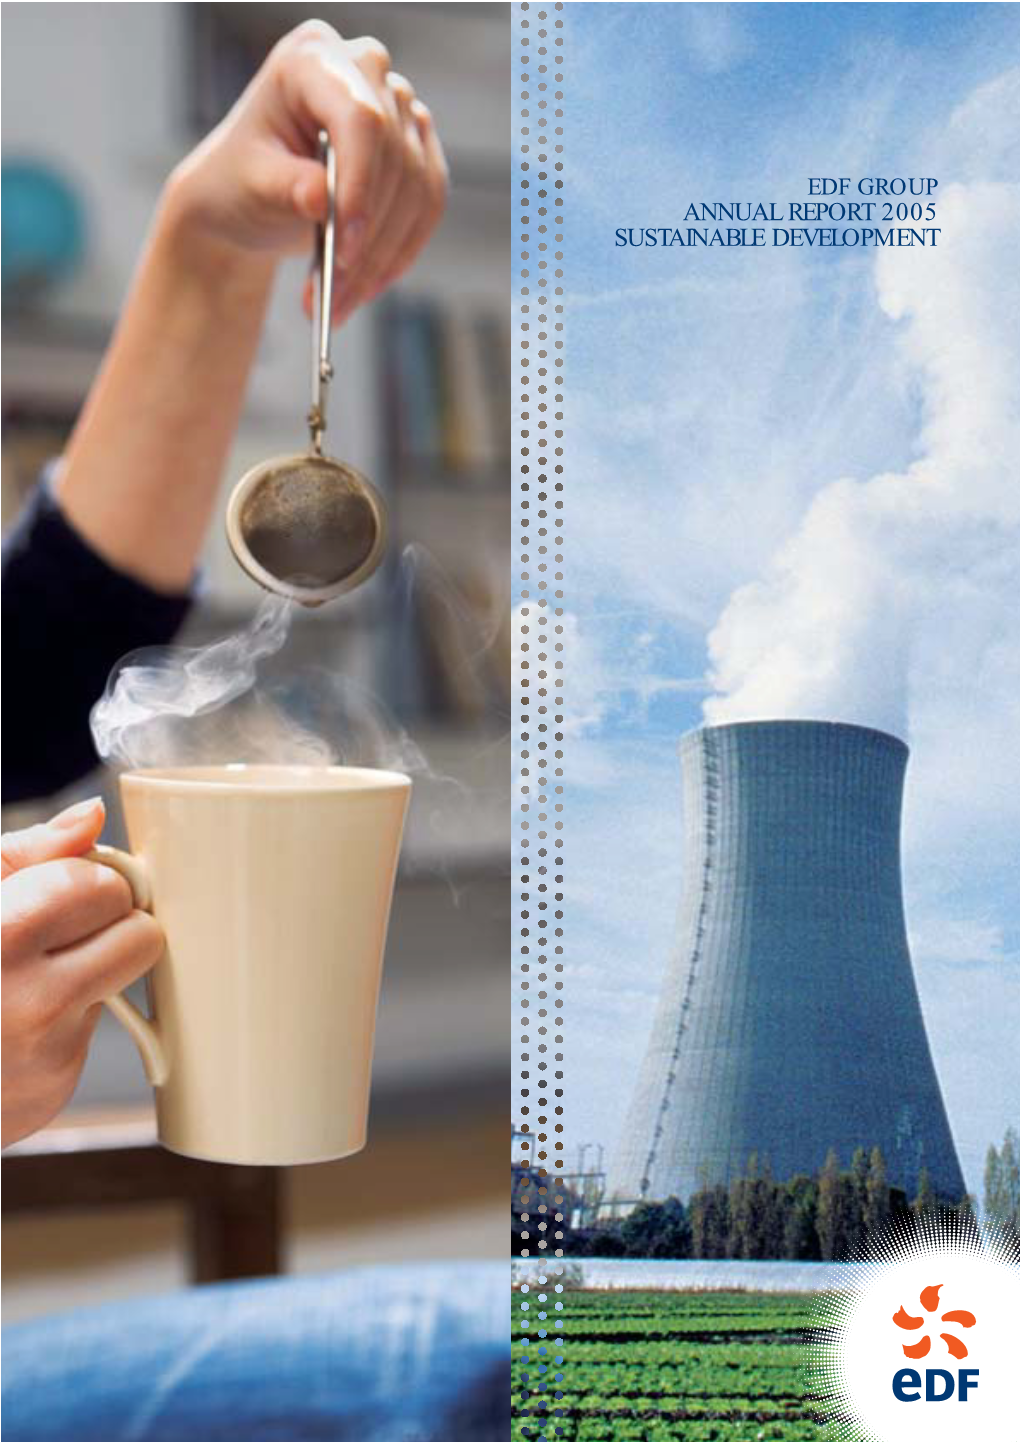 Annual Report 2005 Sustainable Development 2